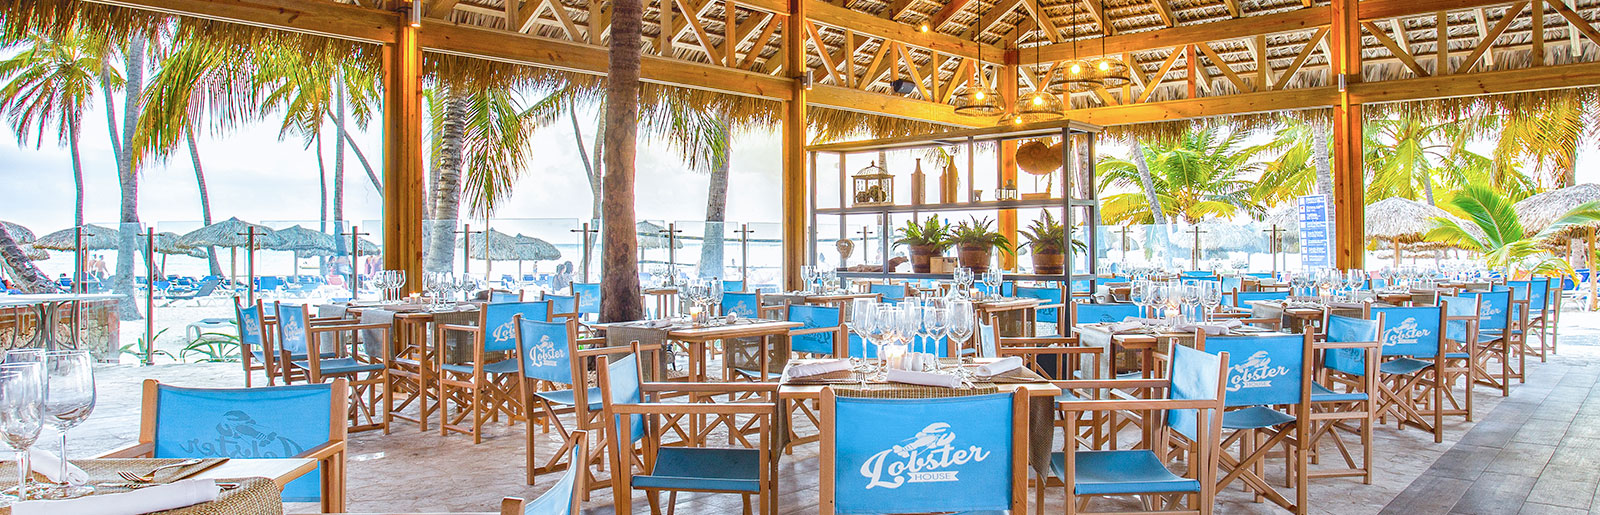 Hotel Belive Punta Cana ofertas viajes singles